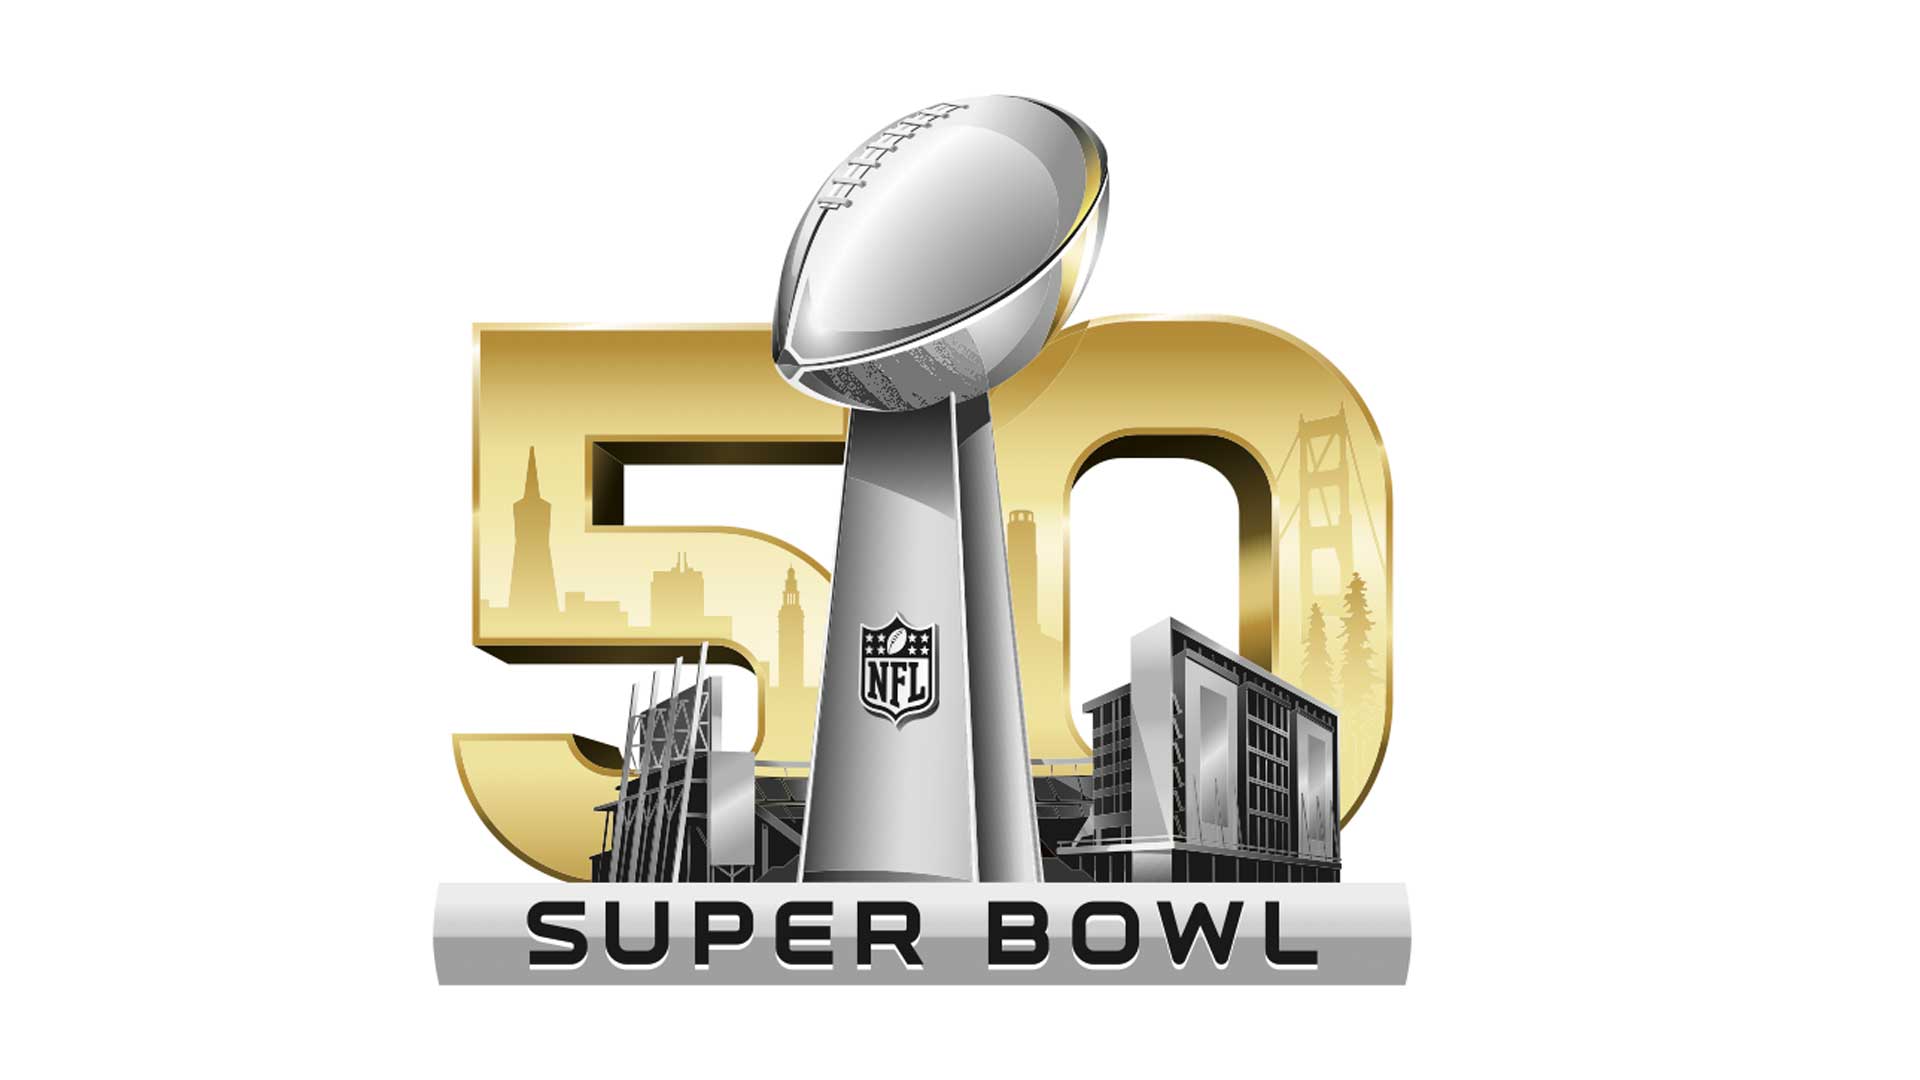 Bowl Logo - The death of the Super Bowl logo